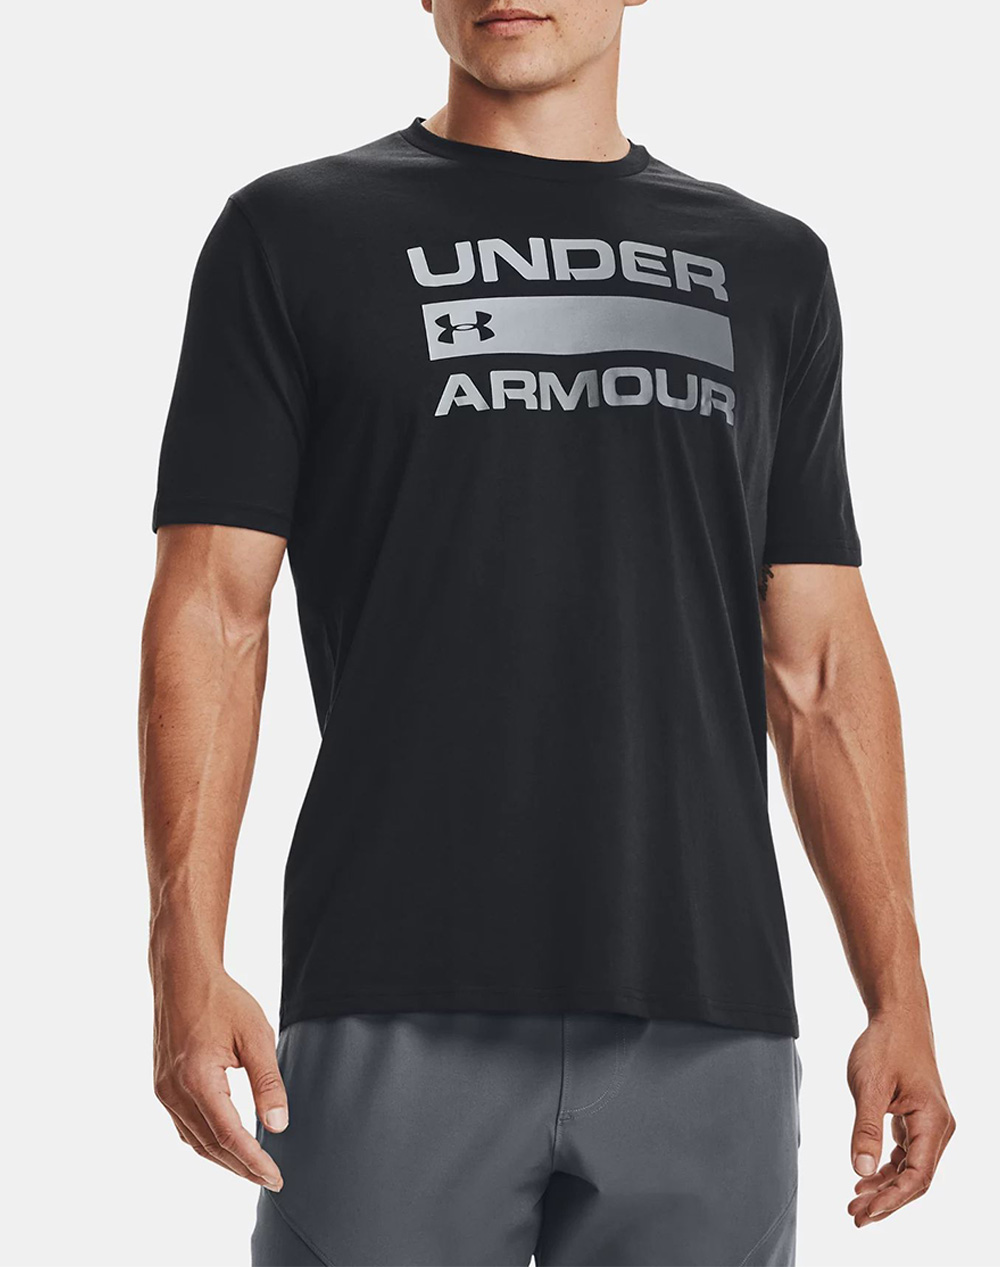 UNDER ARMOUR Men”s UA Team Issue Wordmark Short Sleeve 1329582-1183 Black